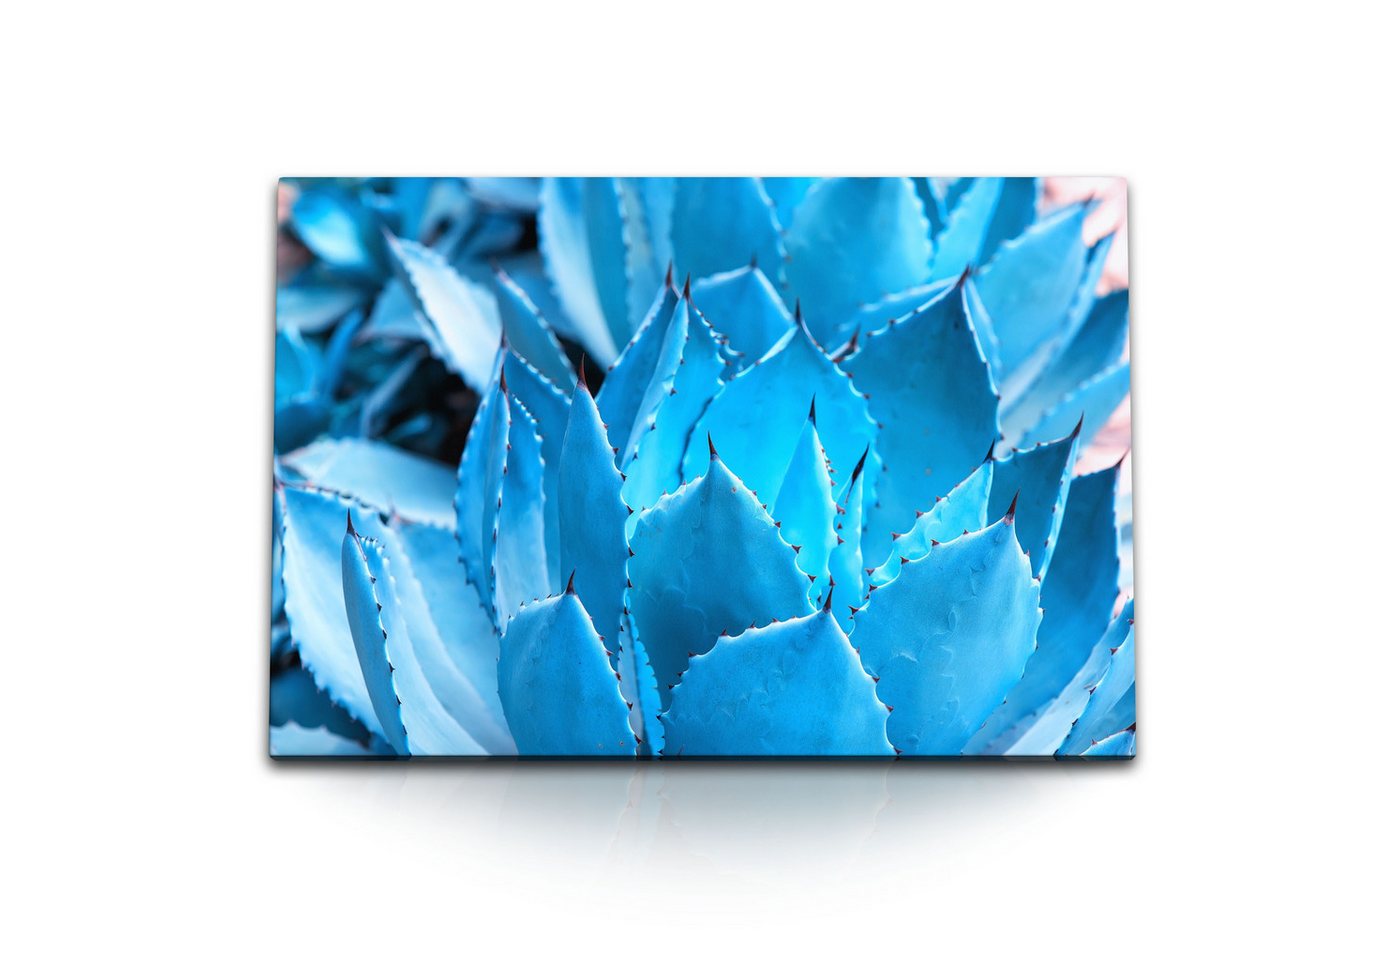 Sinus Art Leinwandbild 120x80cm Wandbild auf Leinwand Hellblauer Kaktus Pflanze Blau Fotokuns, (1 St) von Sinus Art